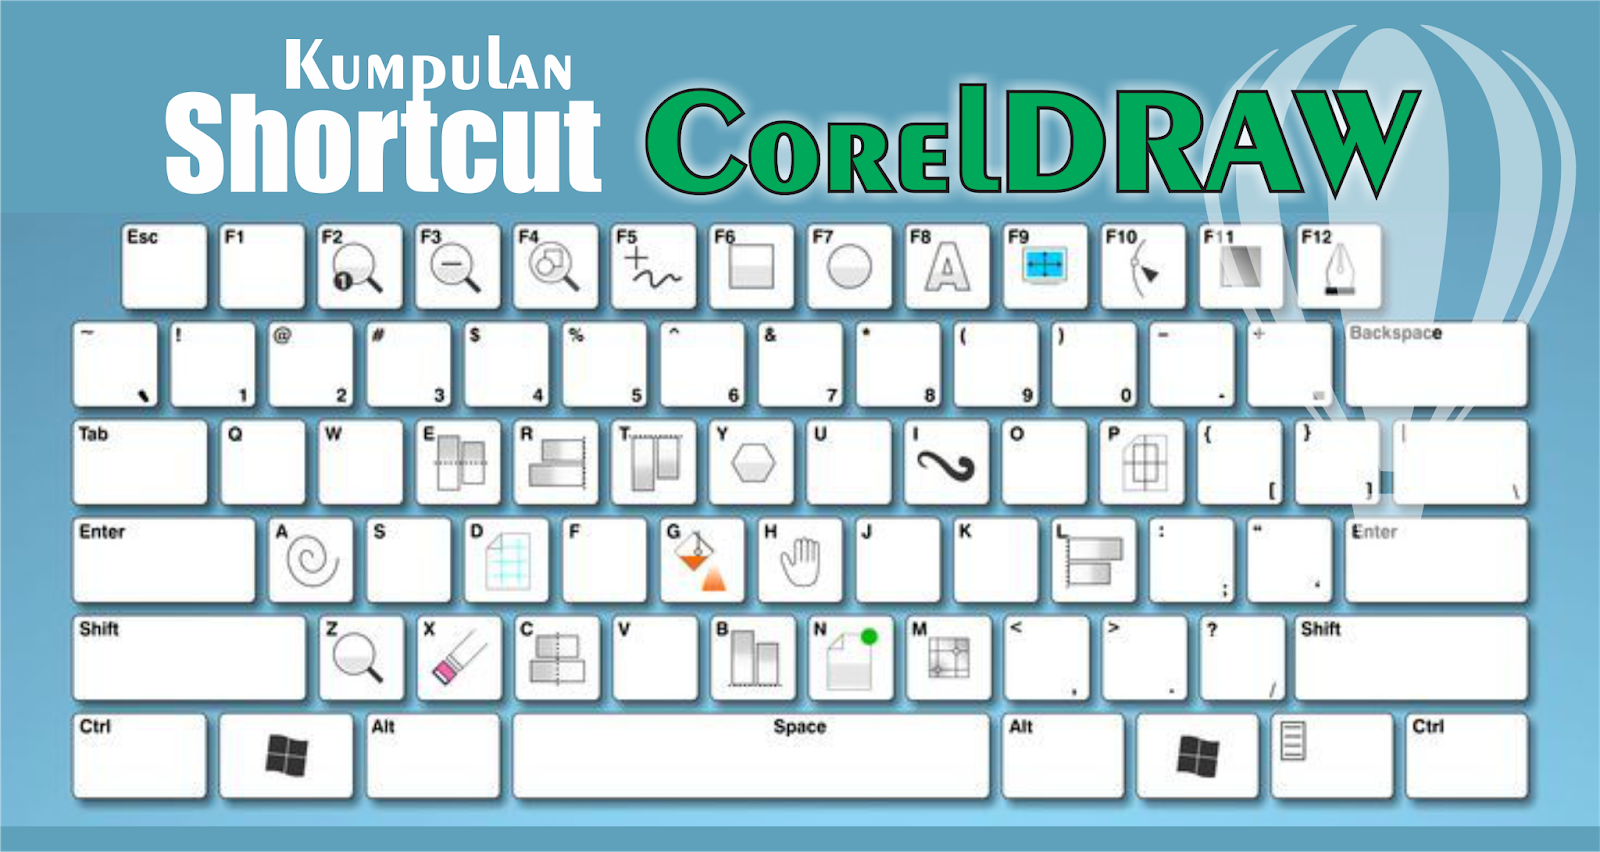 coreldraw 2017 download shortcut